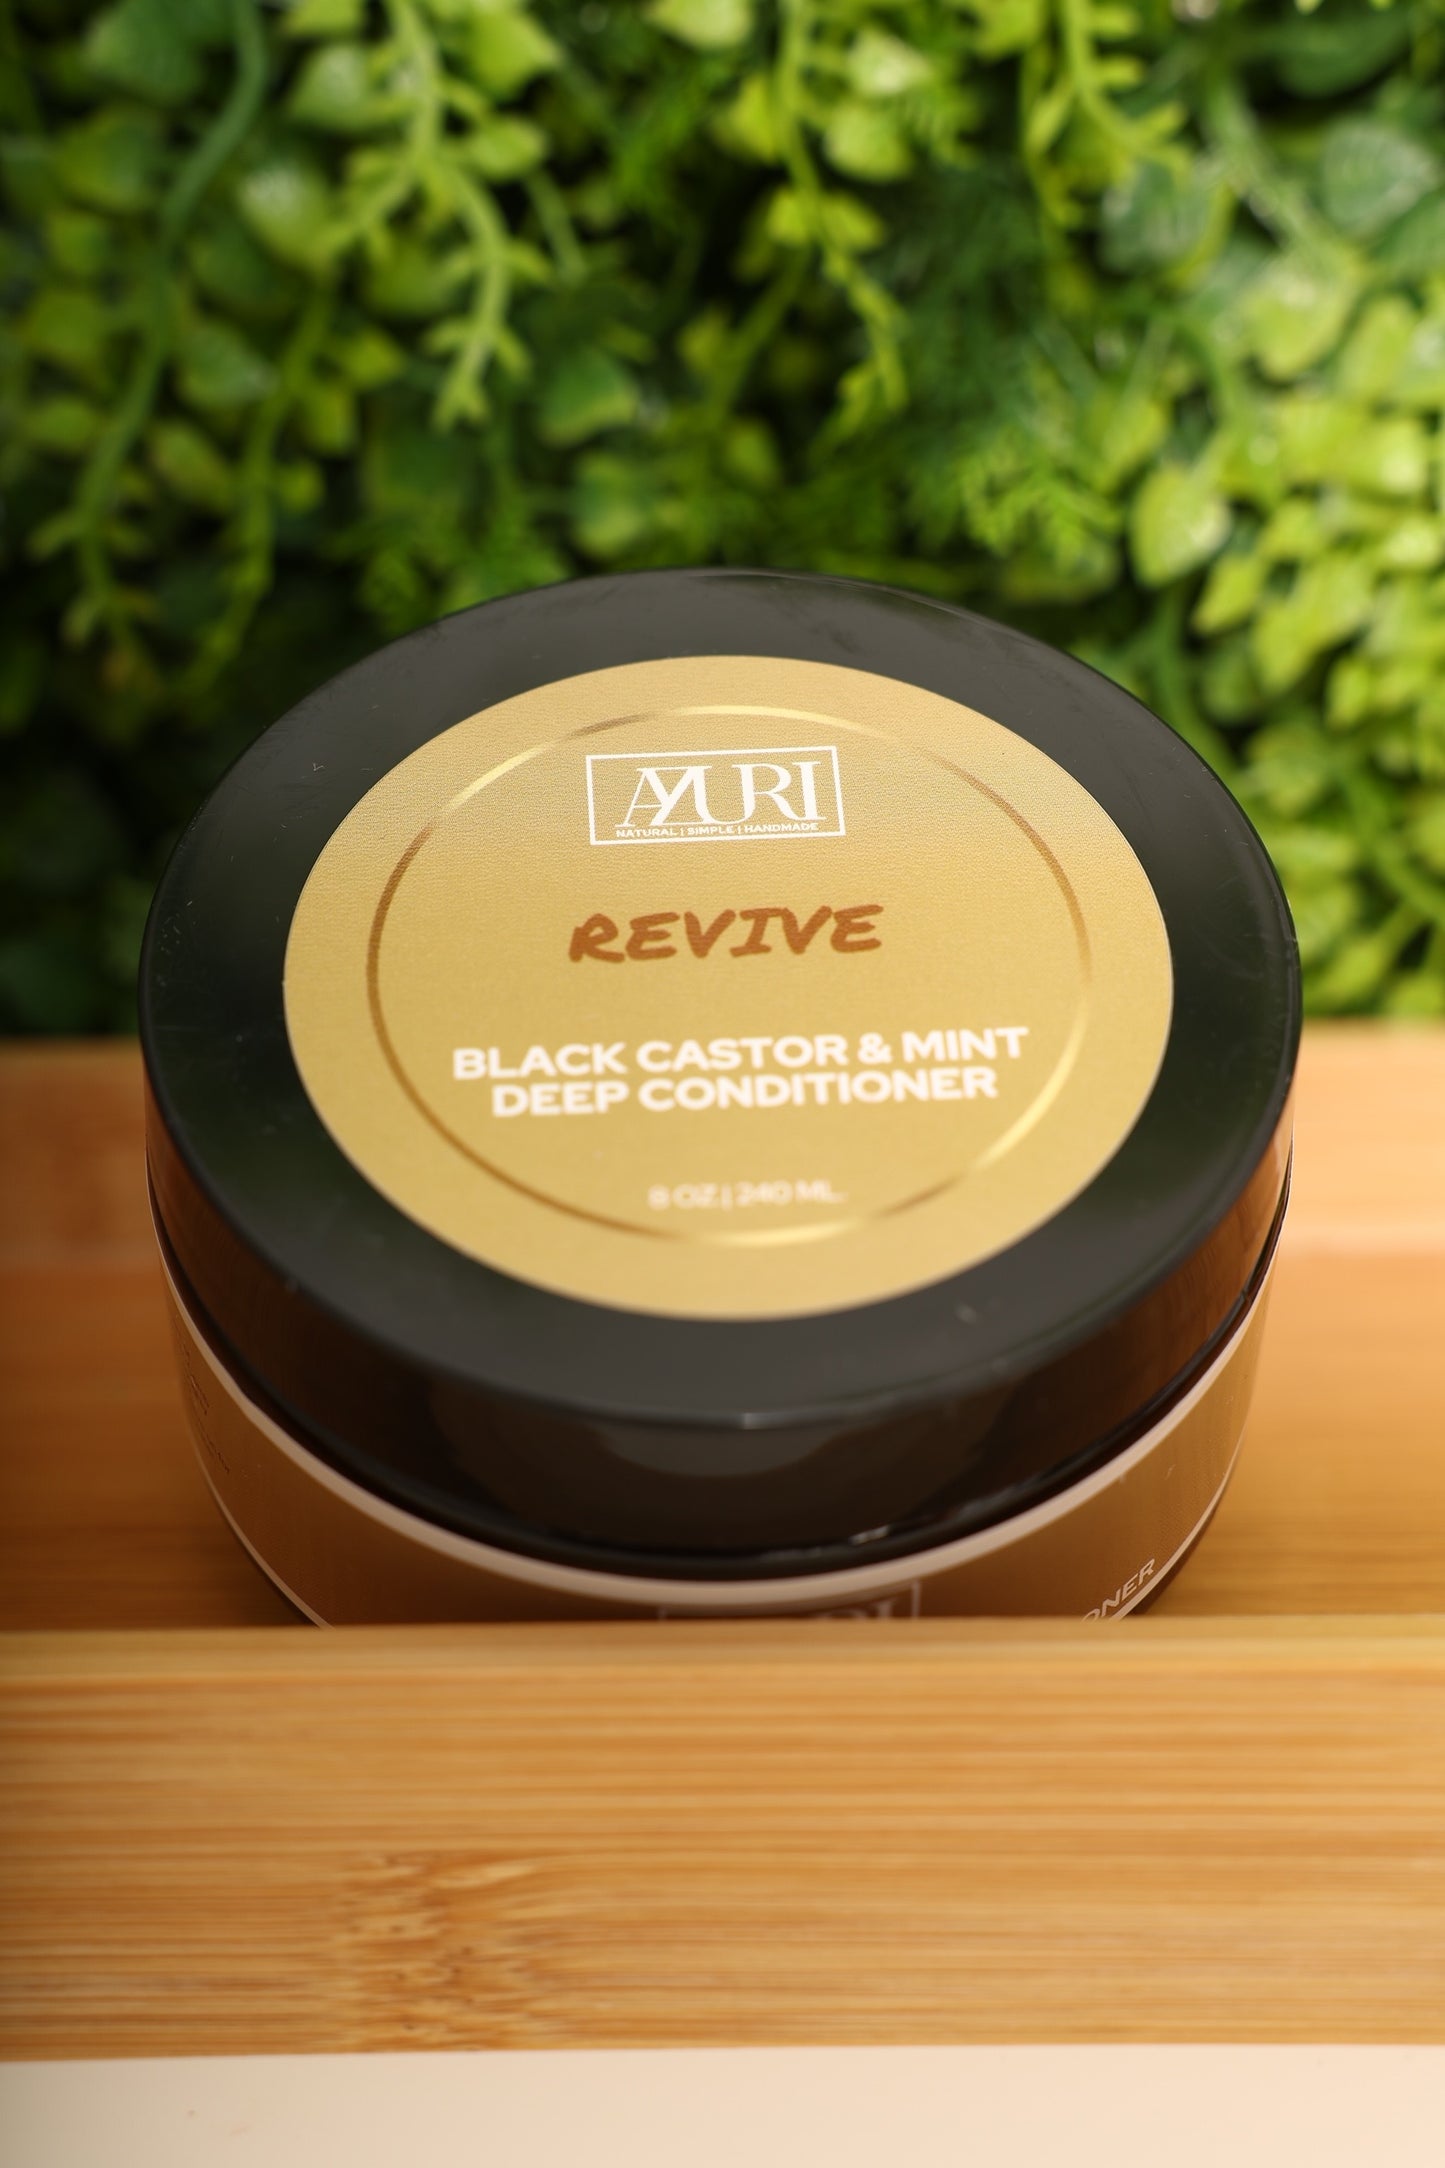 REVIVE- Black Castor & Mint Deep Conditioner